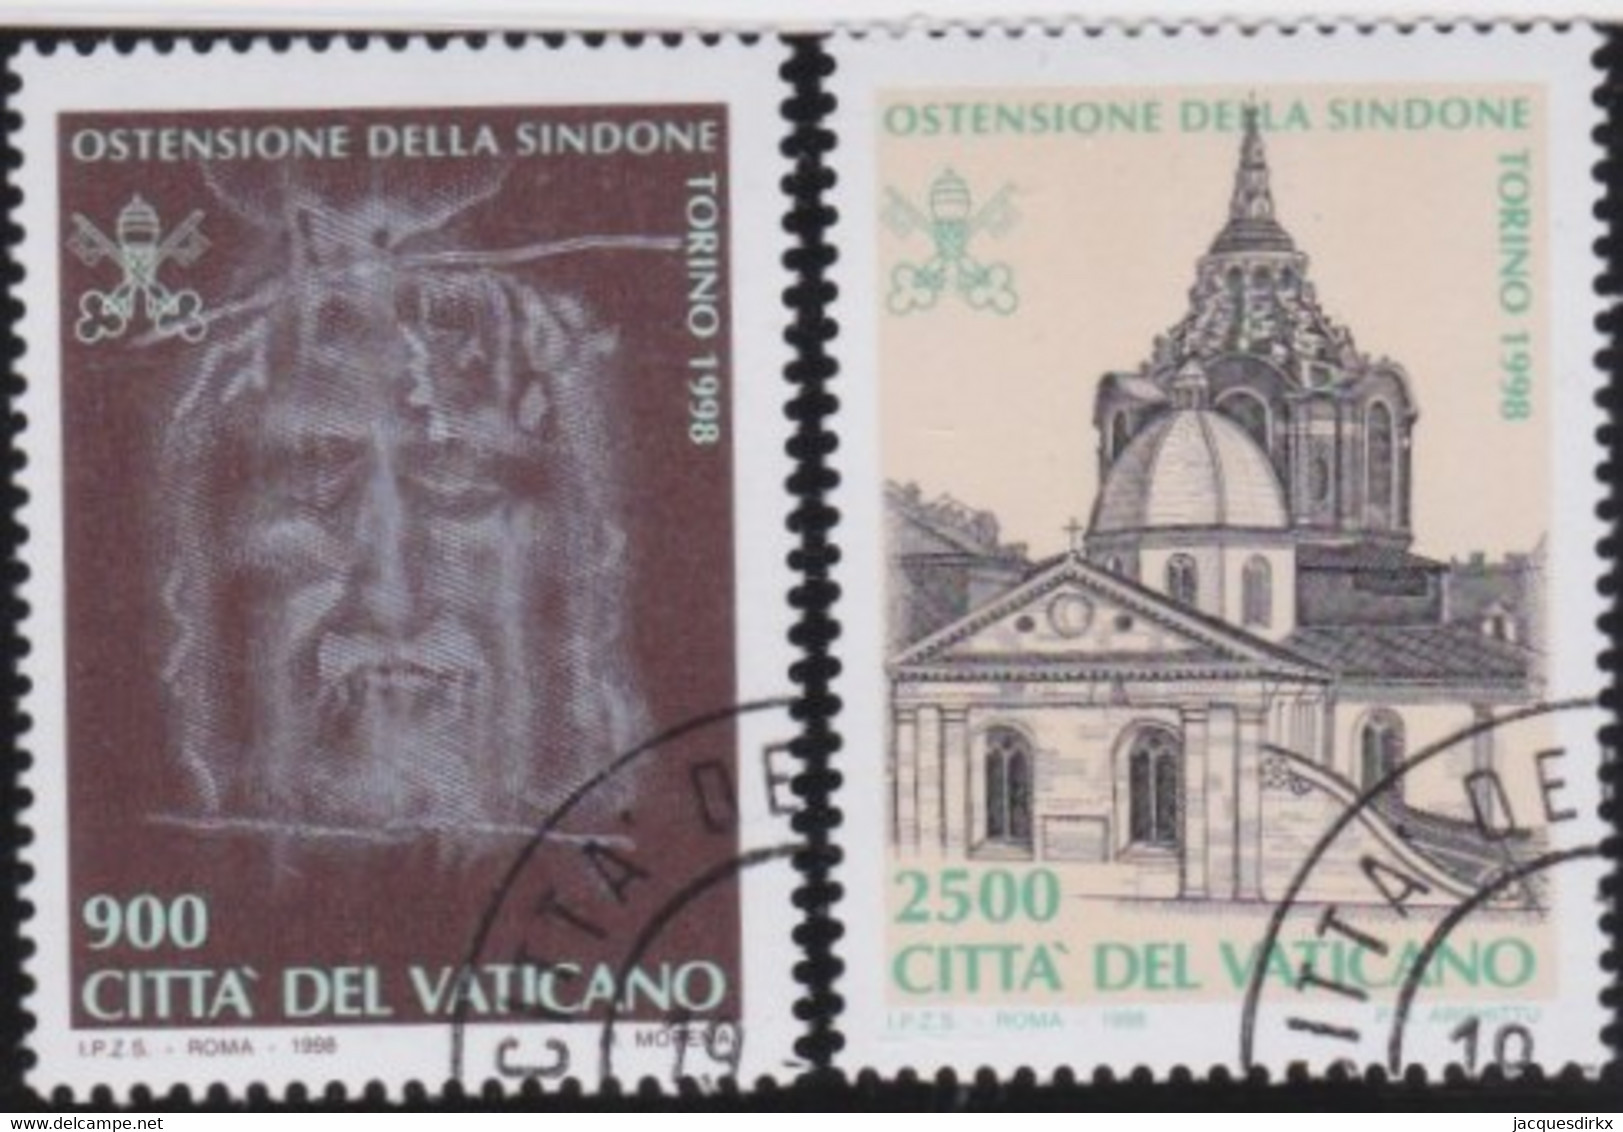 Vatican   .   Y&T   .   1106/1107       .      O     .    Cancelled  .   /   .  Oblitéré - Usados